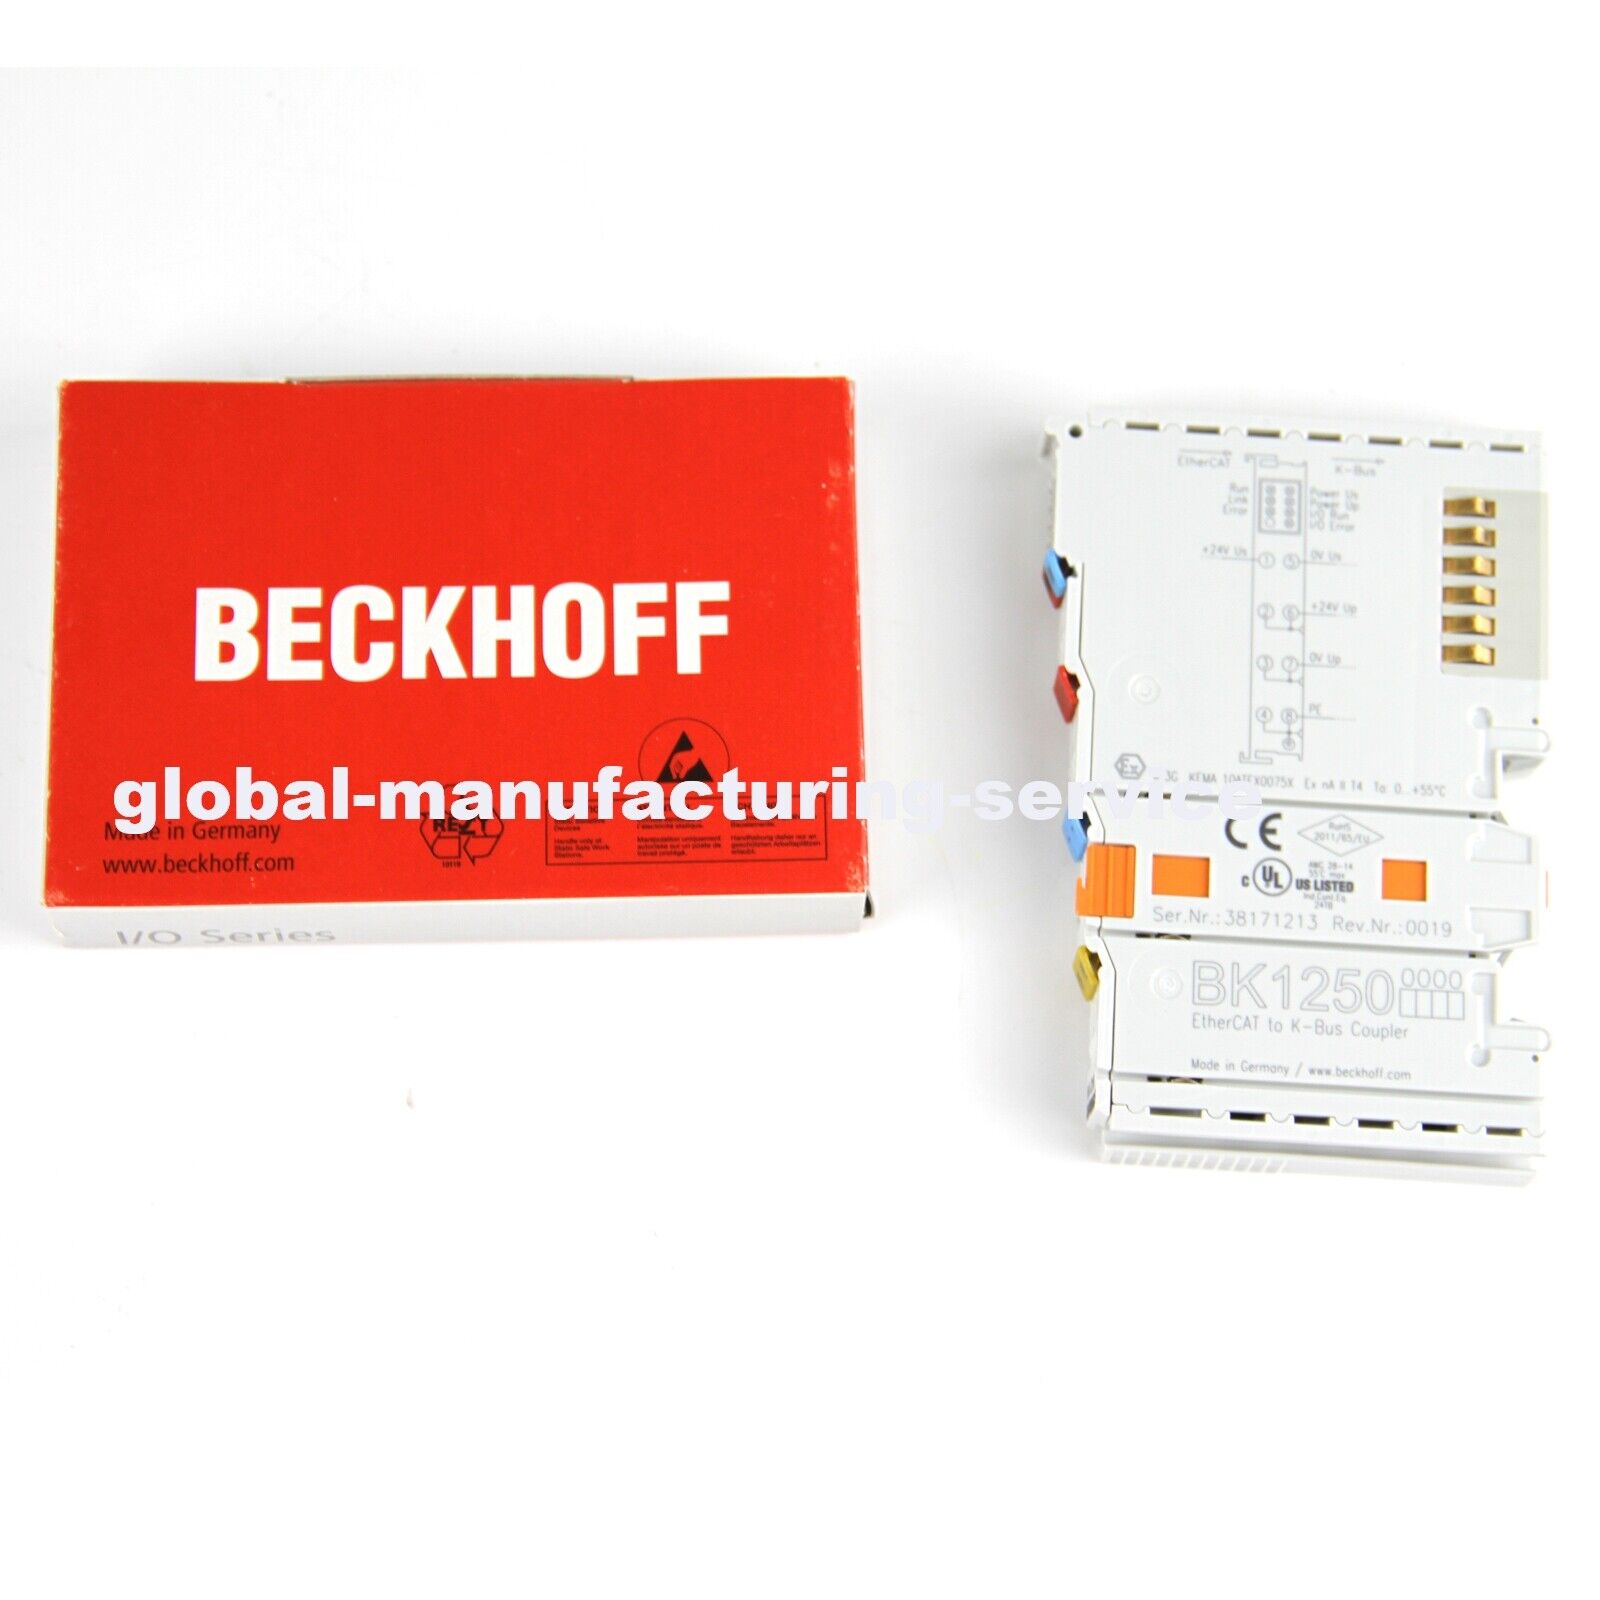 In Box Beckhoff BK1250 PLC Module BK 1250